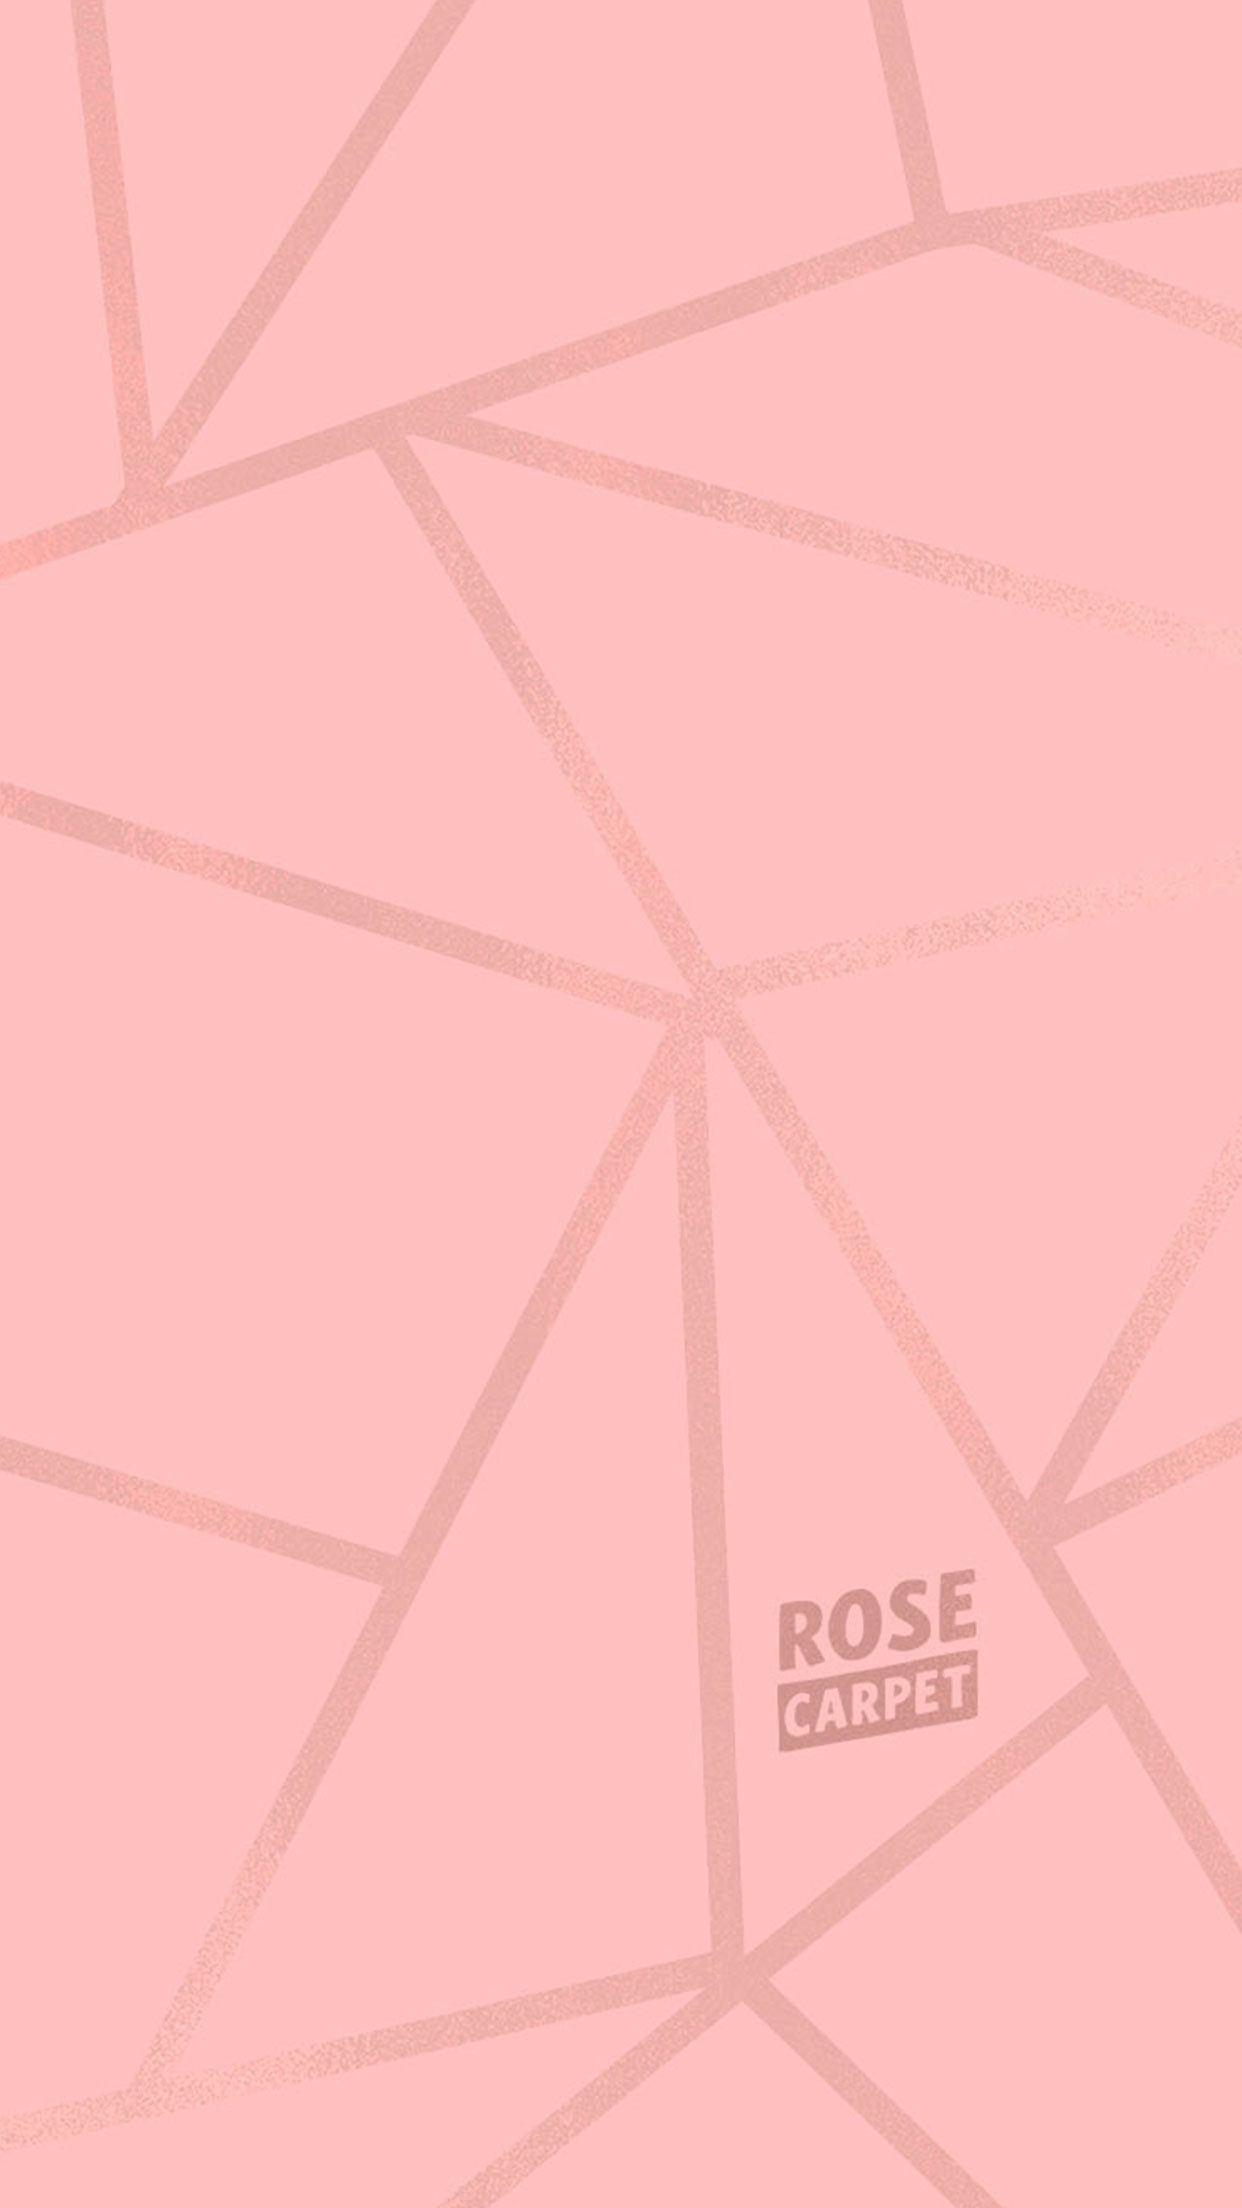 1242x2208 fond d'Ã©cran iphone rose carpet